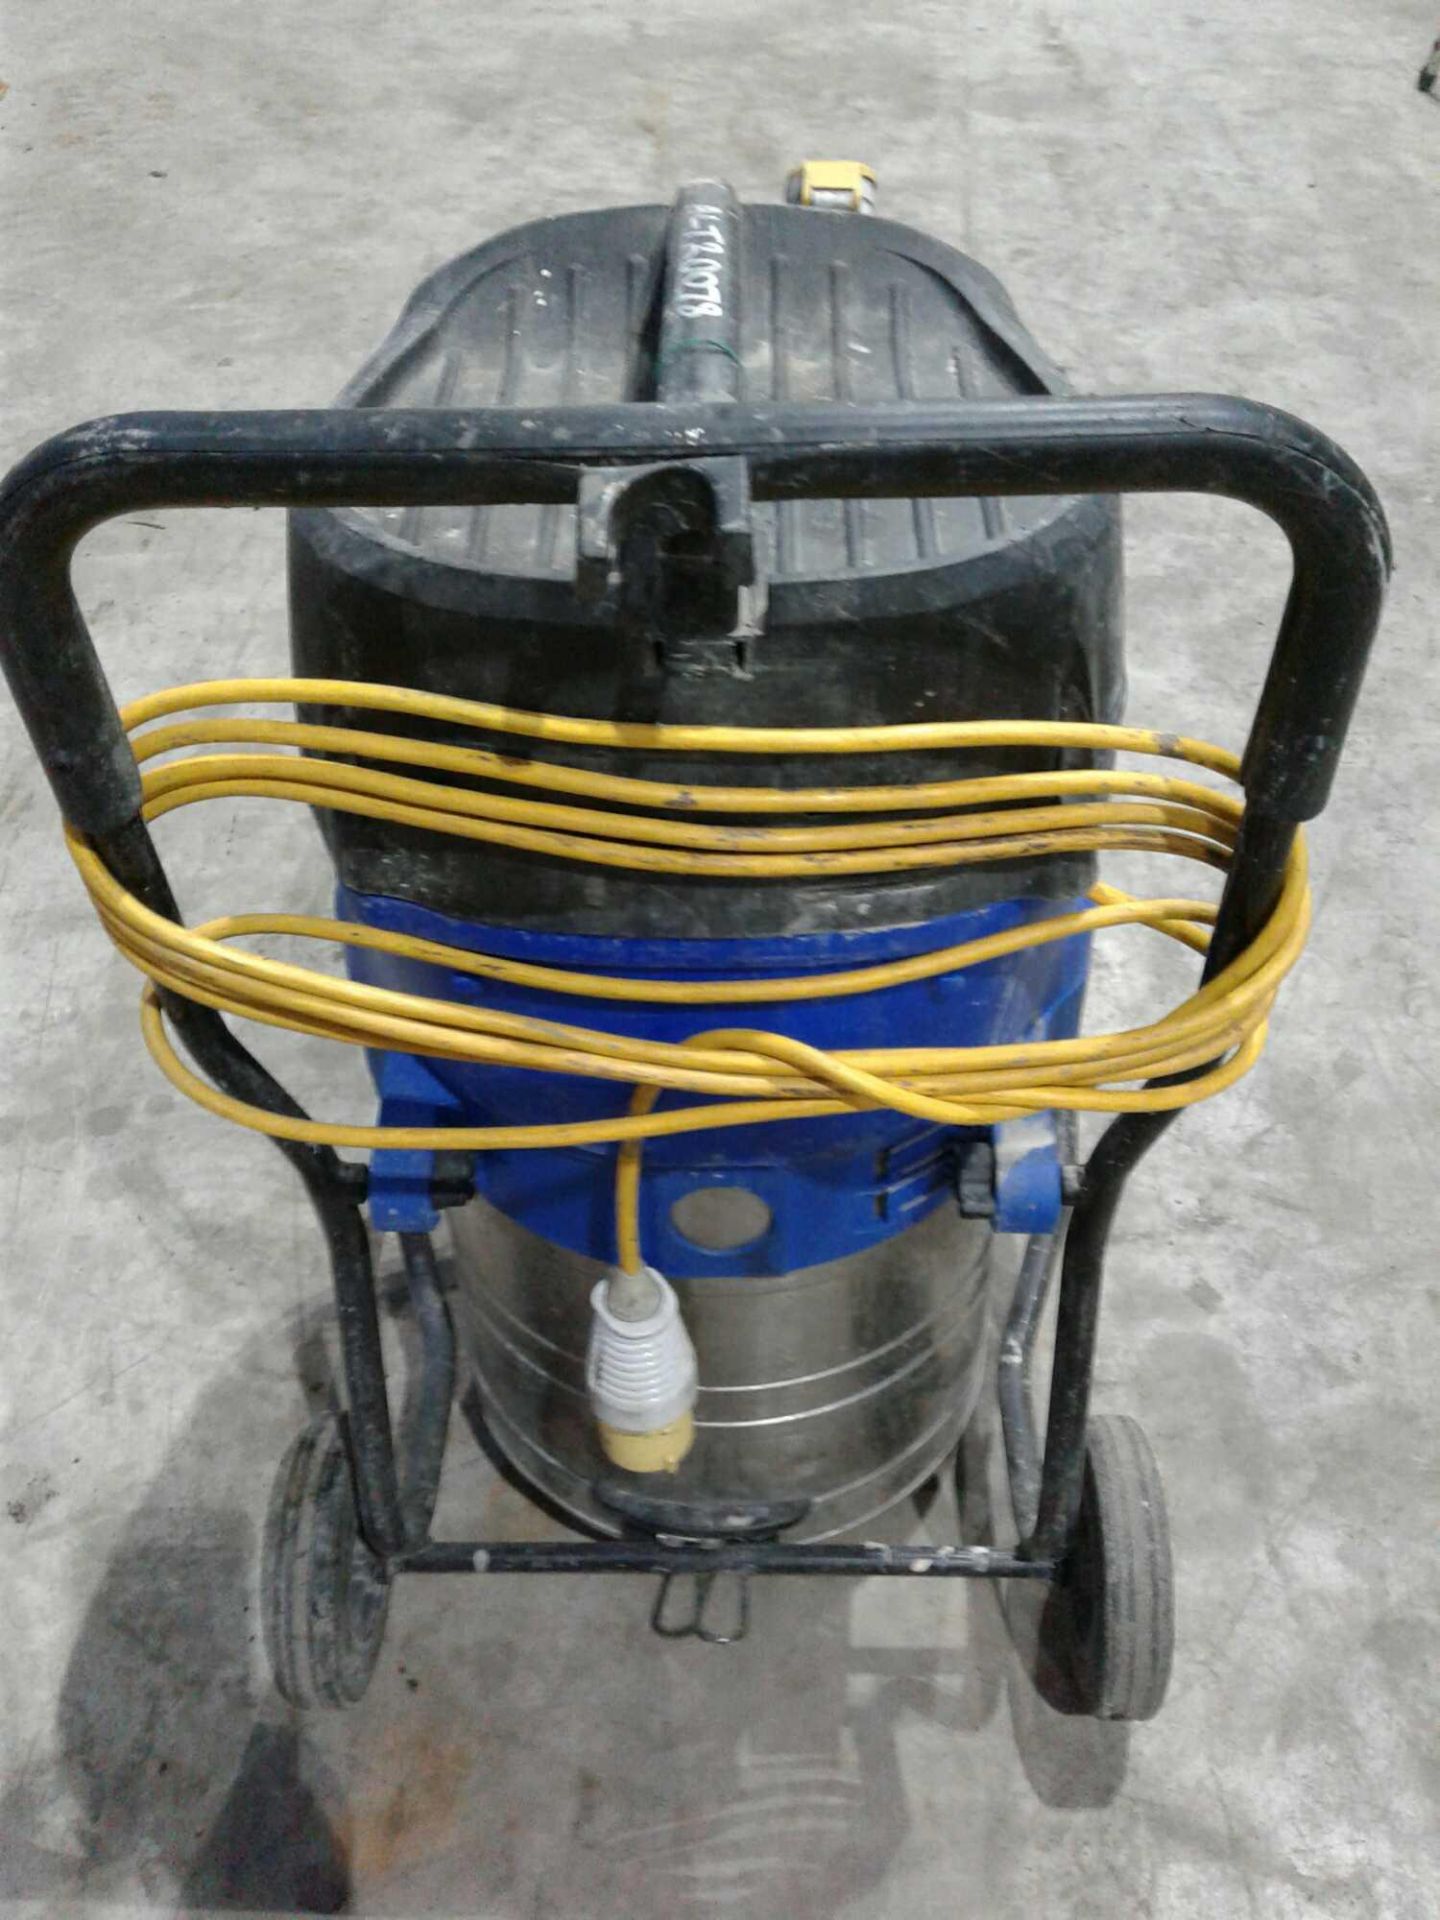 Nilfisk alto attix industrial vacuum cleaner 110 V 32 amp - Image 2 of 2